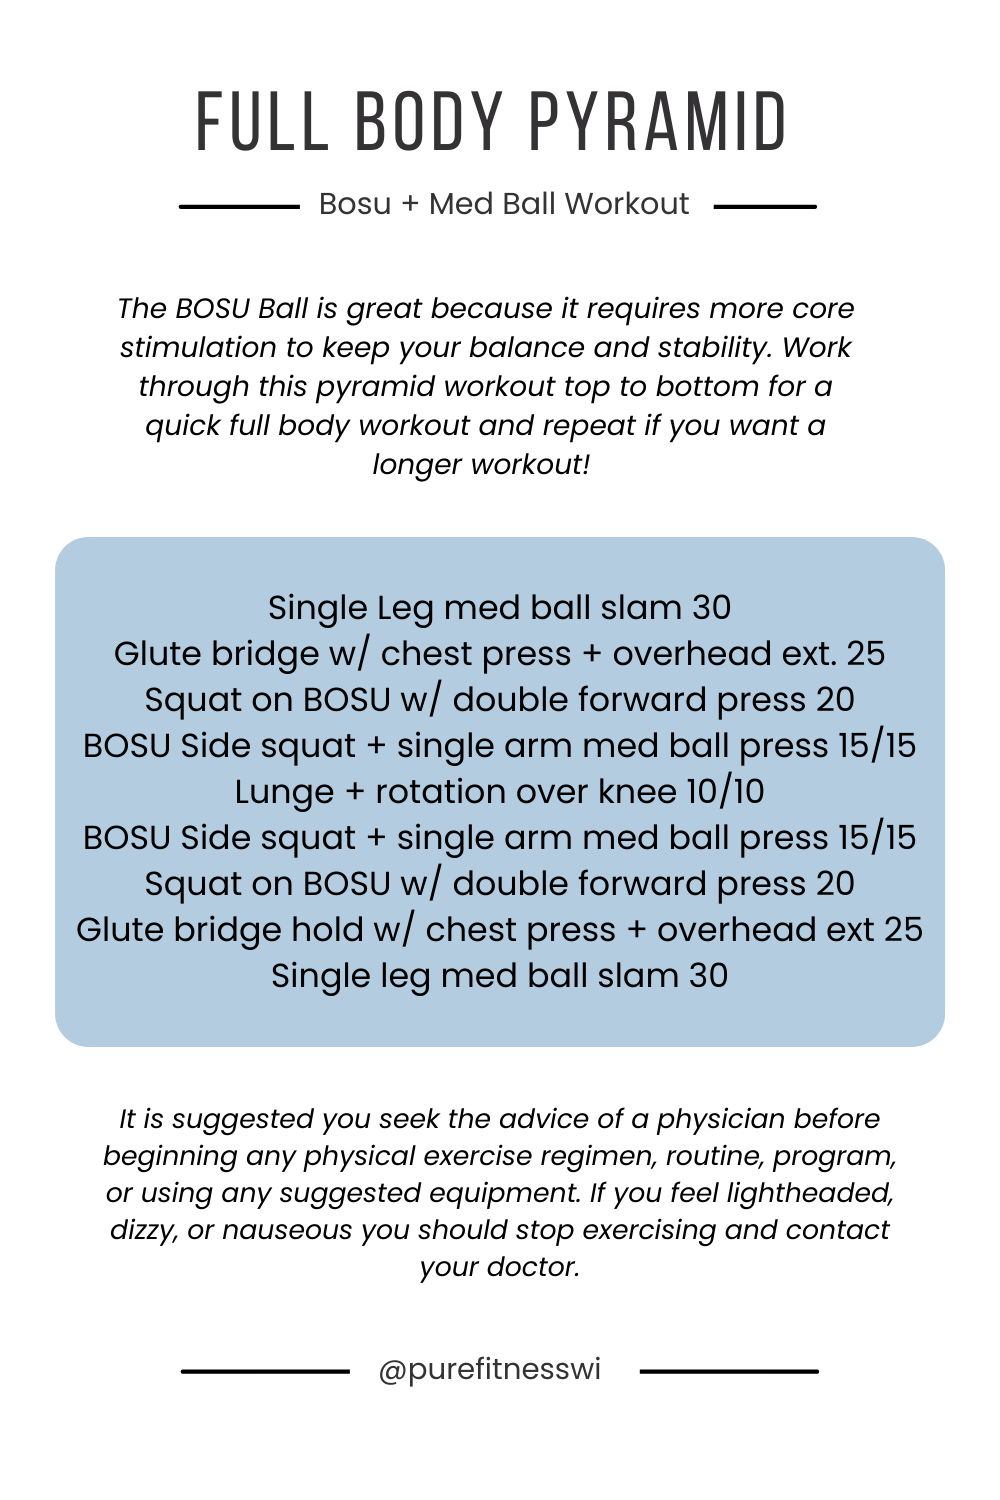 fully body pyramid workout bosu